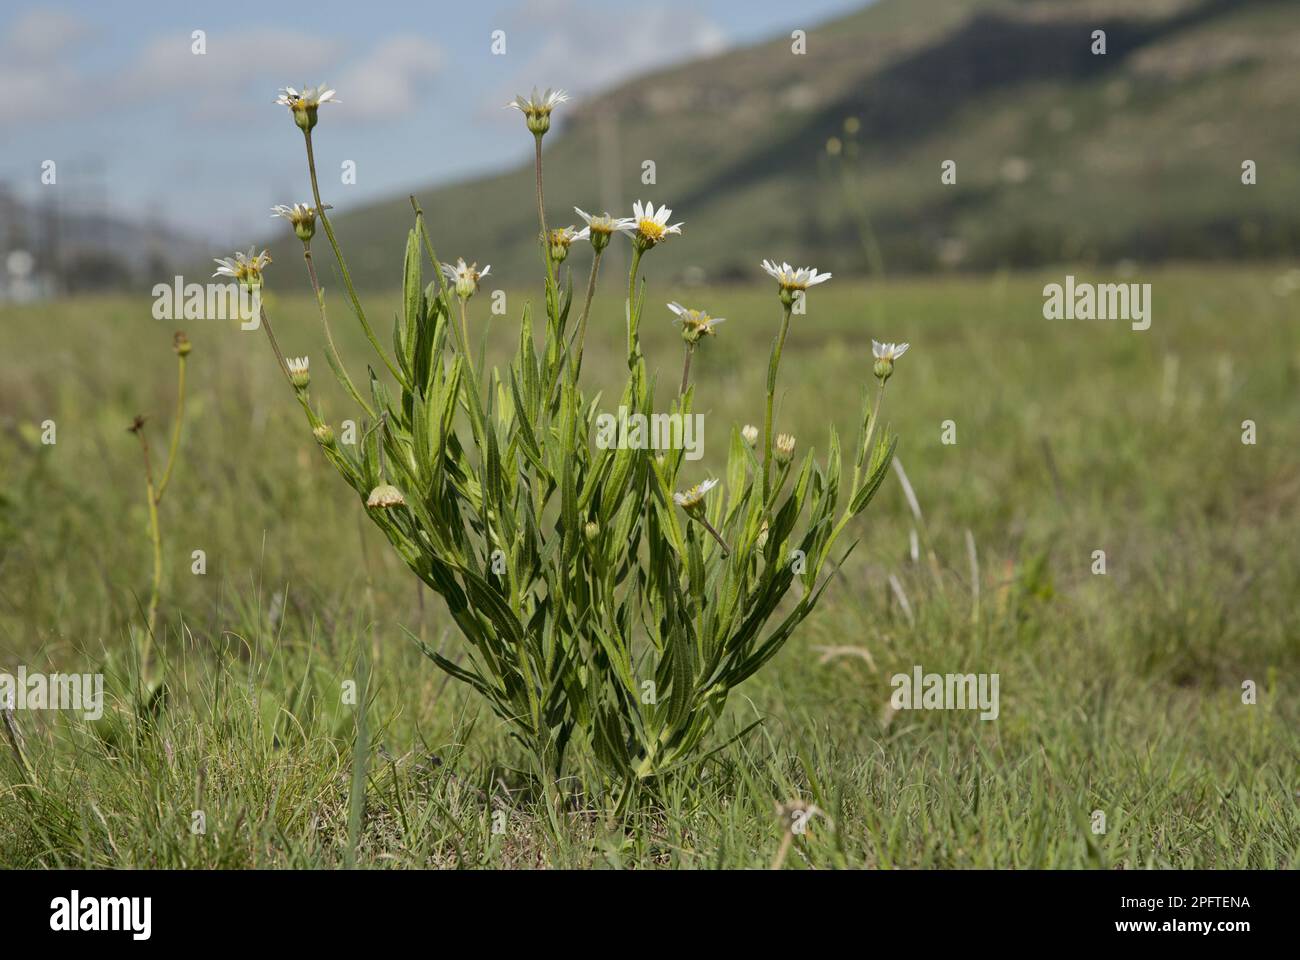 Aster (Aster pleiocephalus) flowering, growing in grassland, Wakkerstroom, Mpumalanga, South Africa Stock Photo